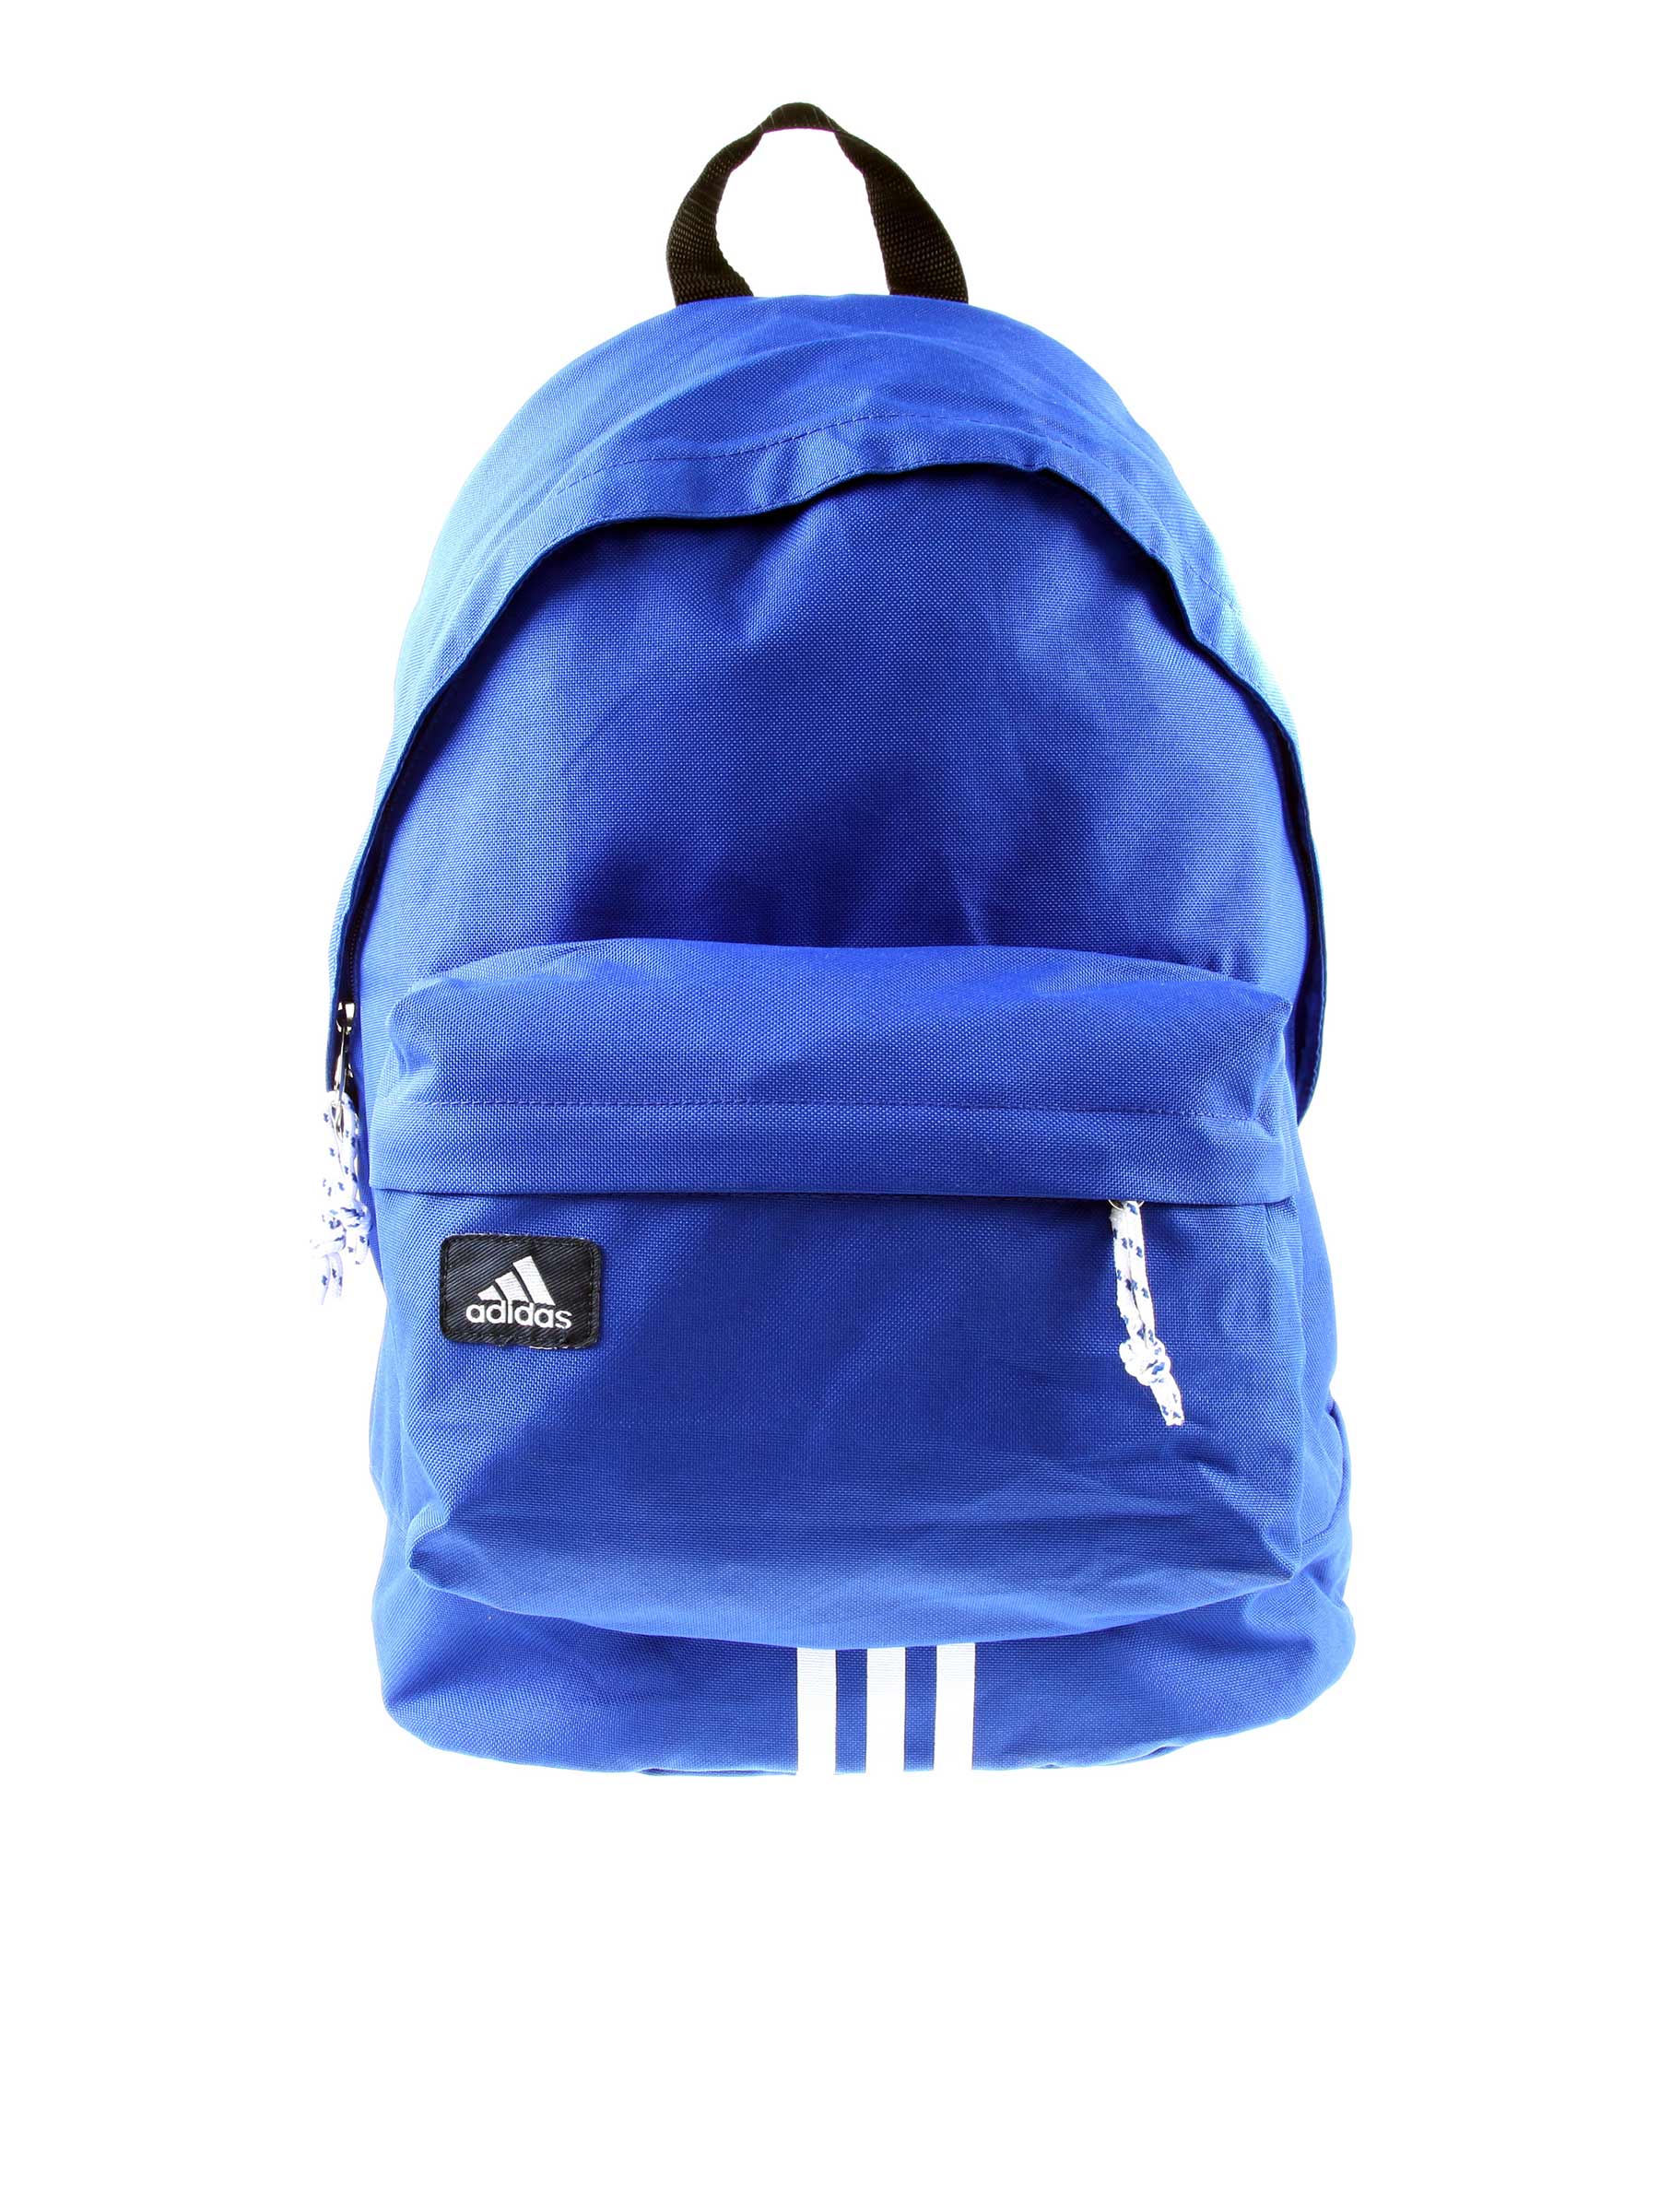 ADIDAS Unisex Classic Blue Backpack